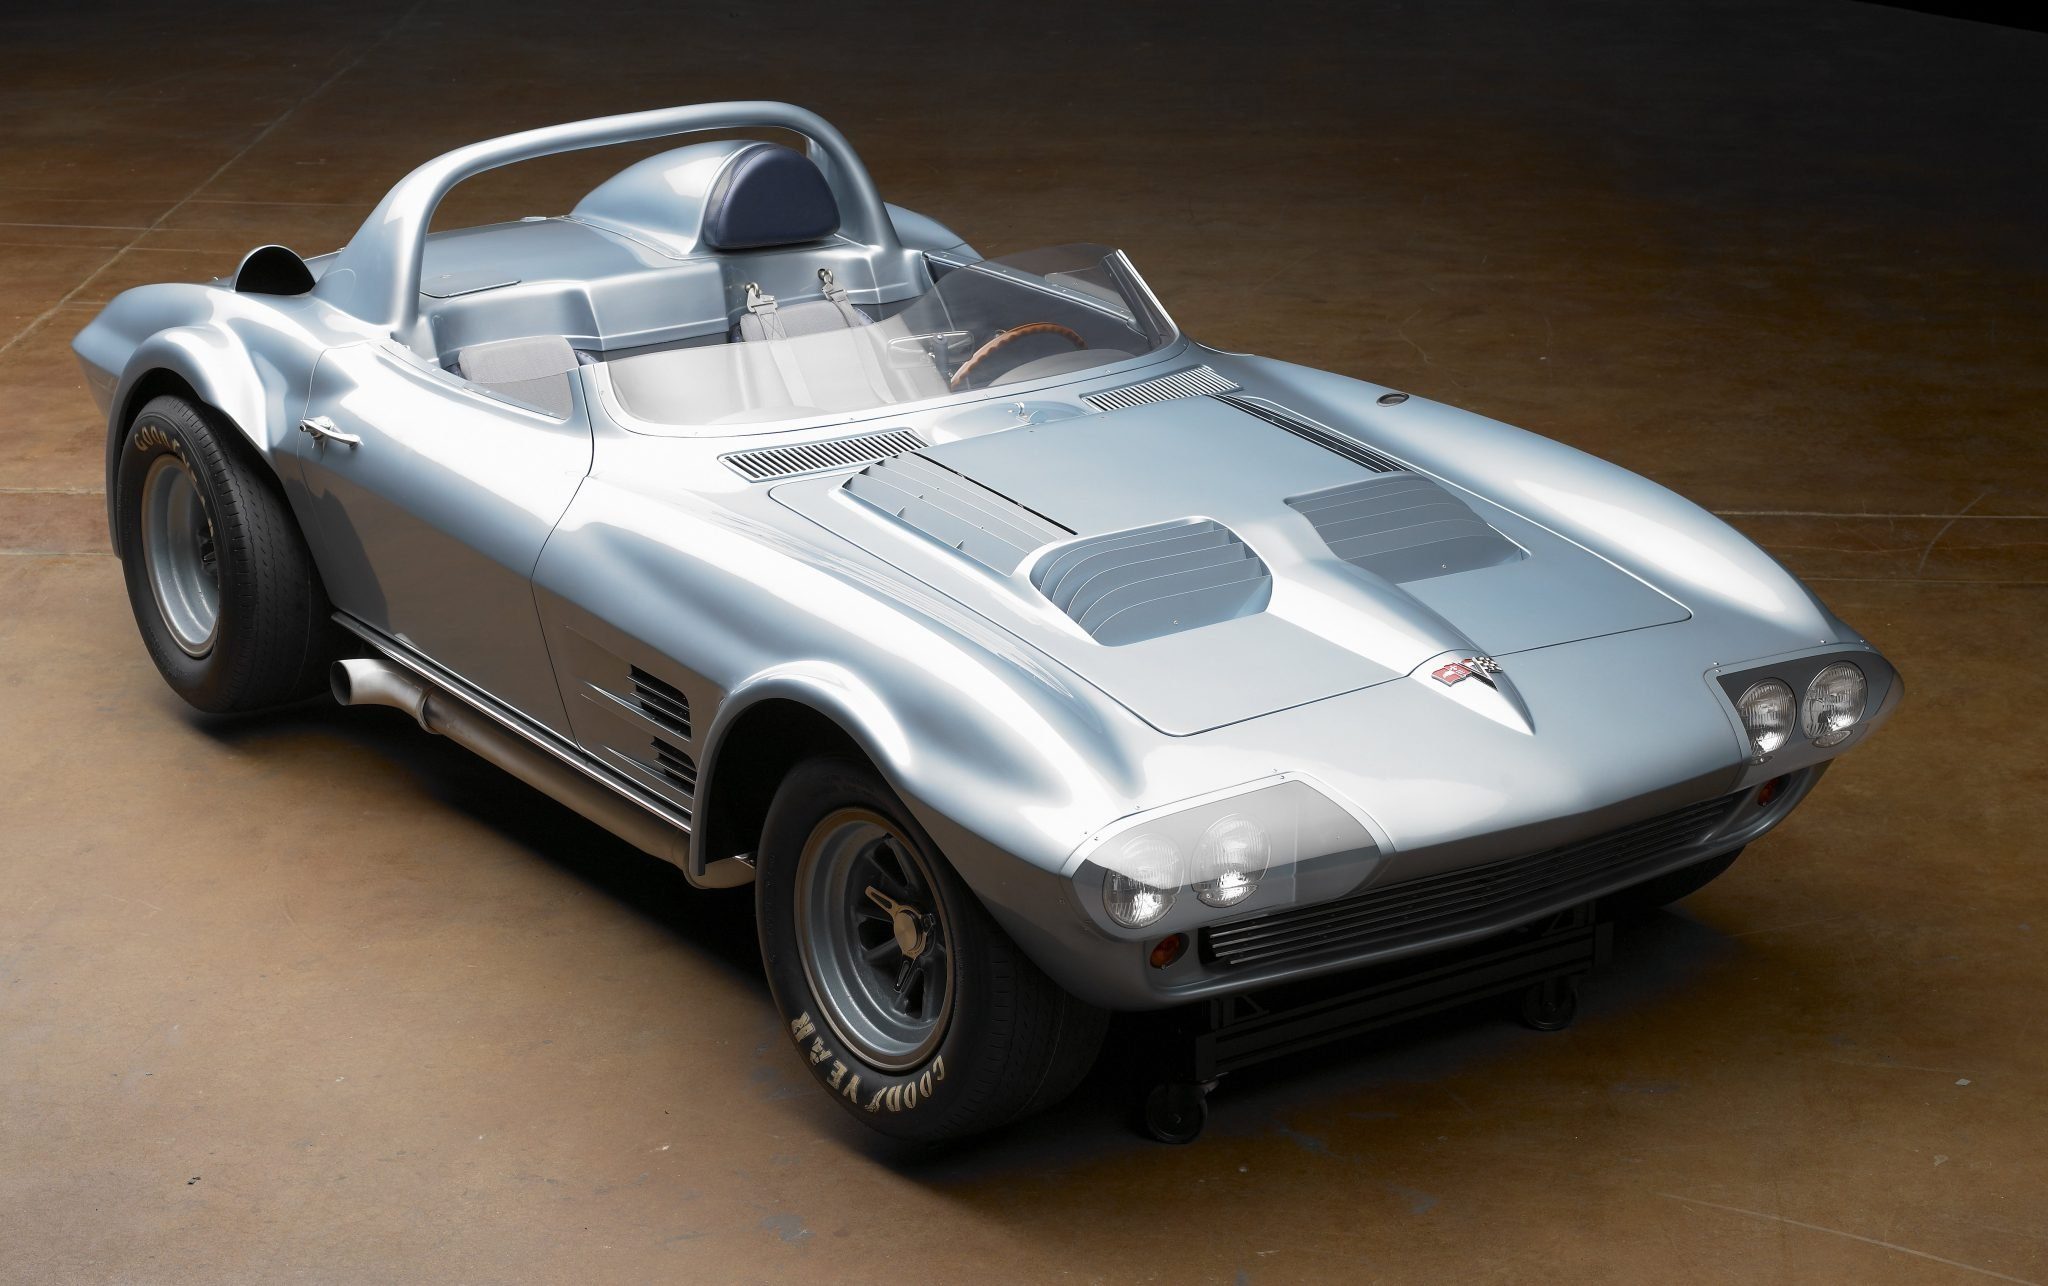 1963-Corvette-Grand-Sport-Replica-high-front-3q.jpg